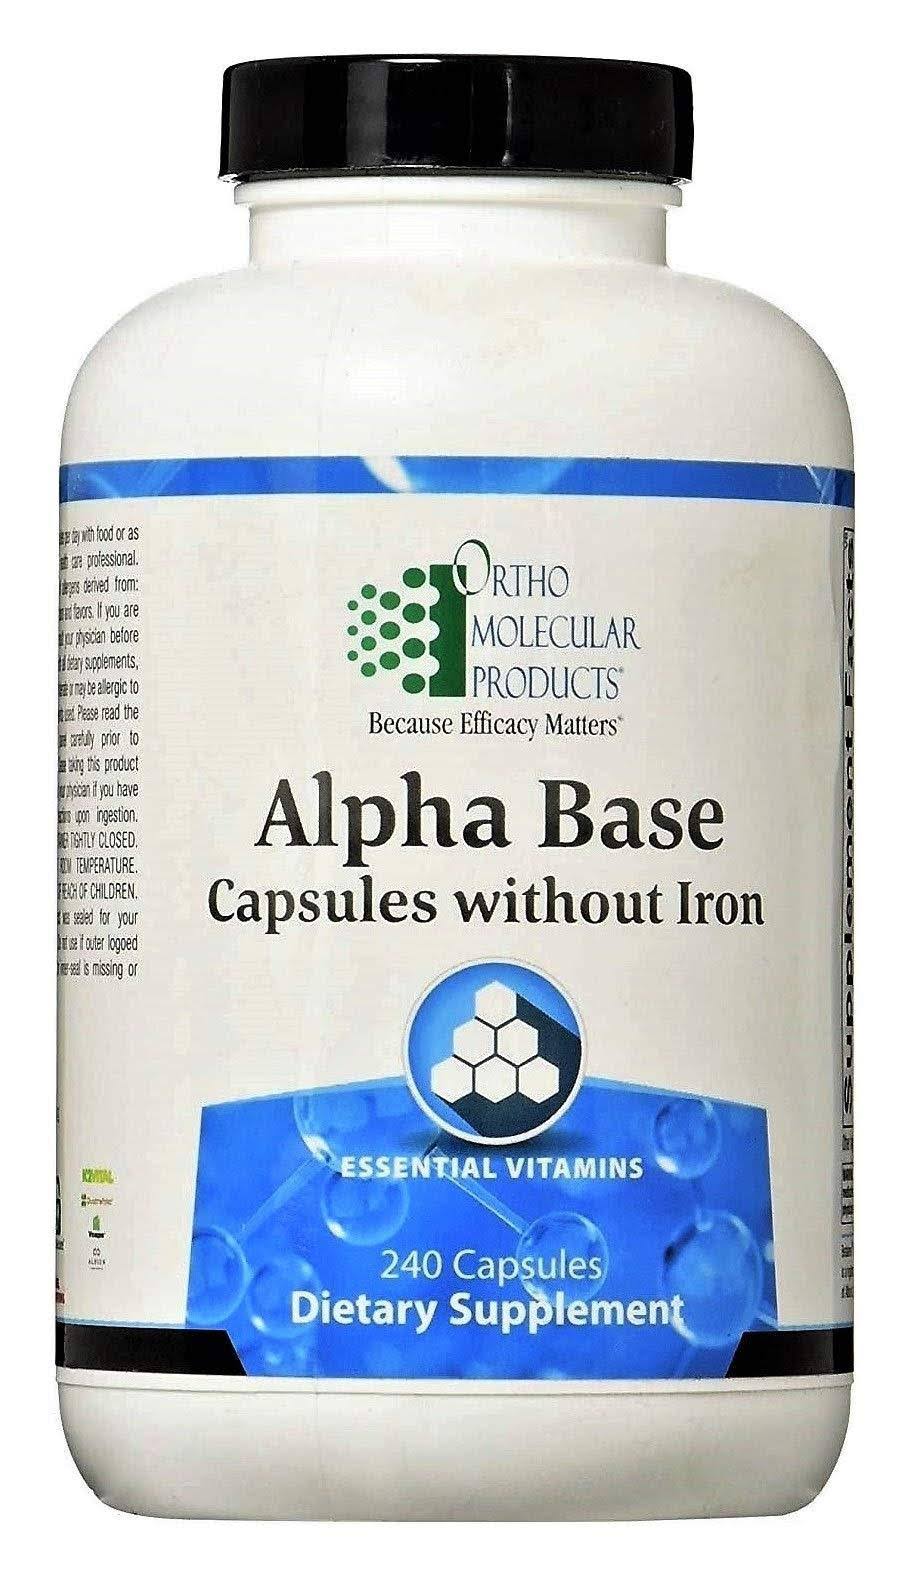 Ortho Molecular Products Alpha Base Without Iron Capsules - 240 capsules